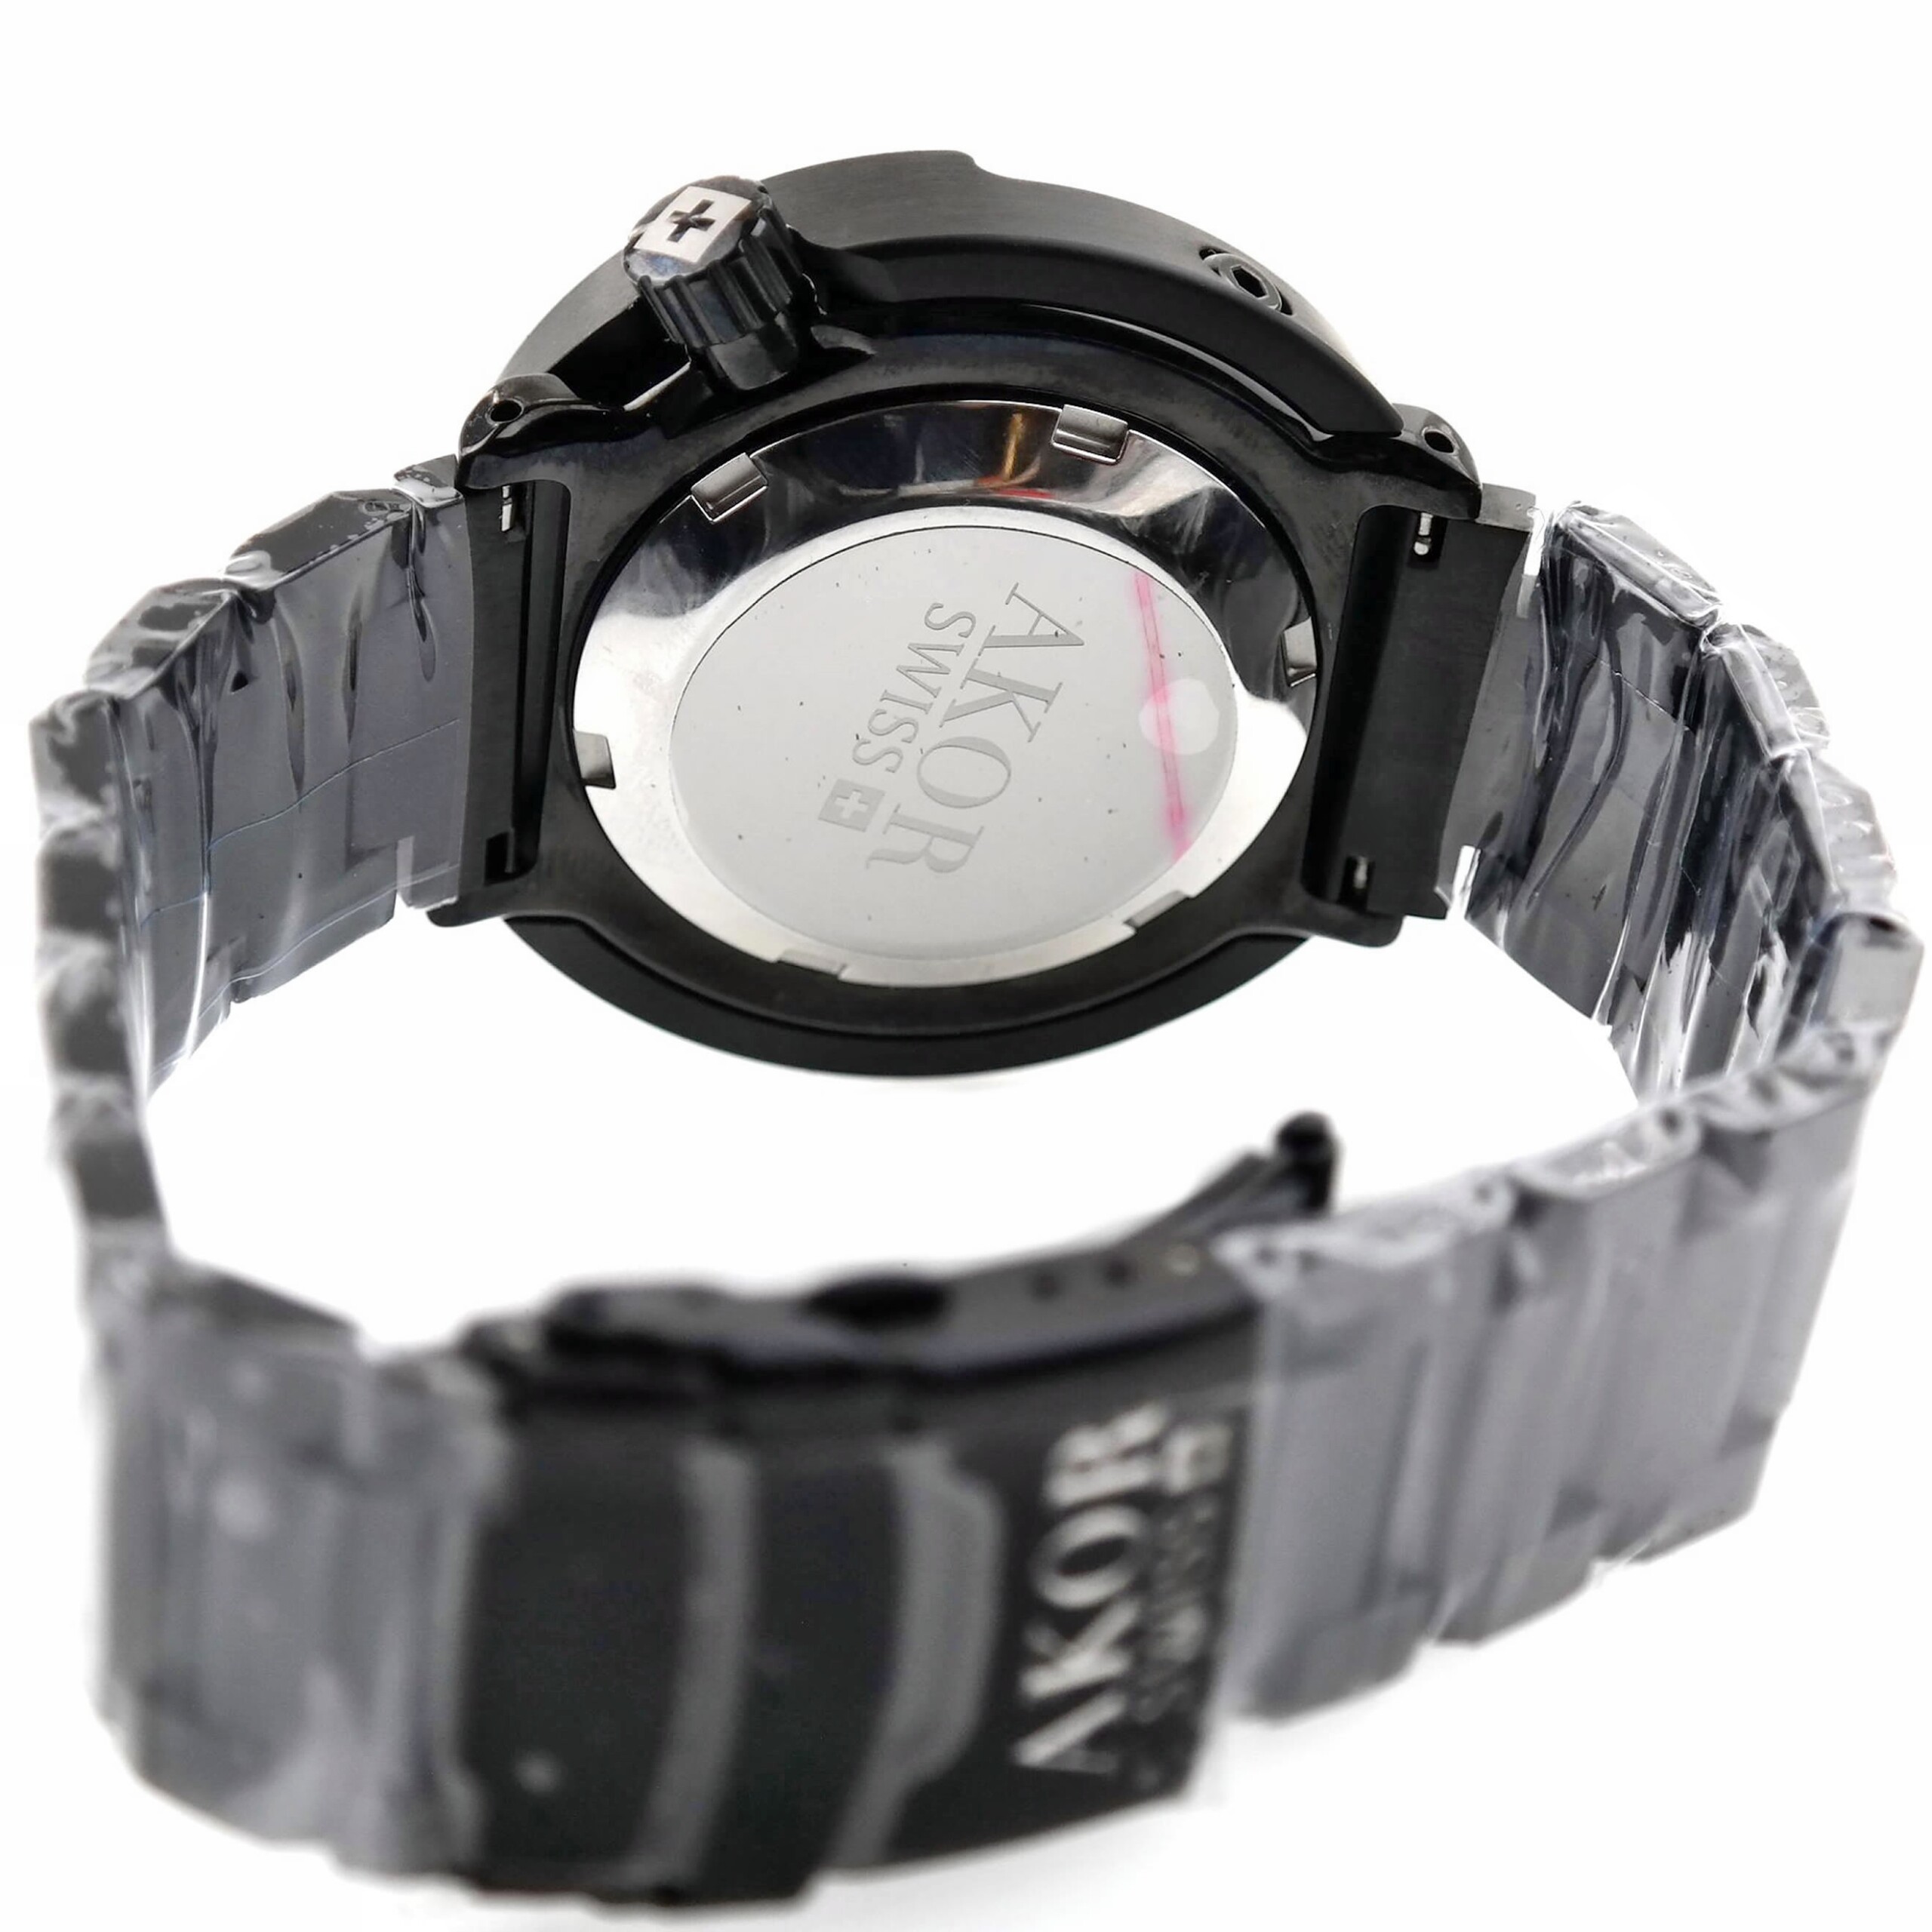 AKOR SWISS - DEEP SEA HUNTER Automatic Watch - Diving 300 M - All Black